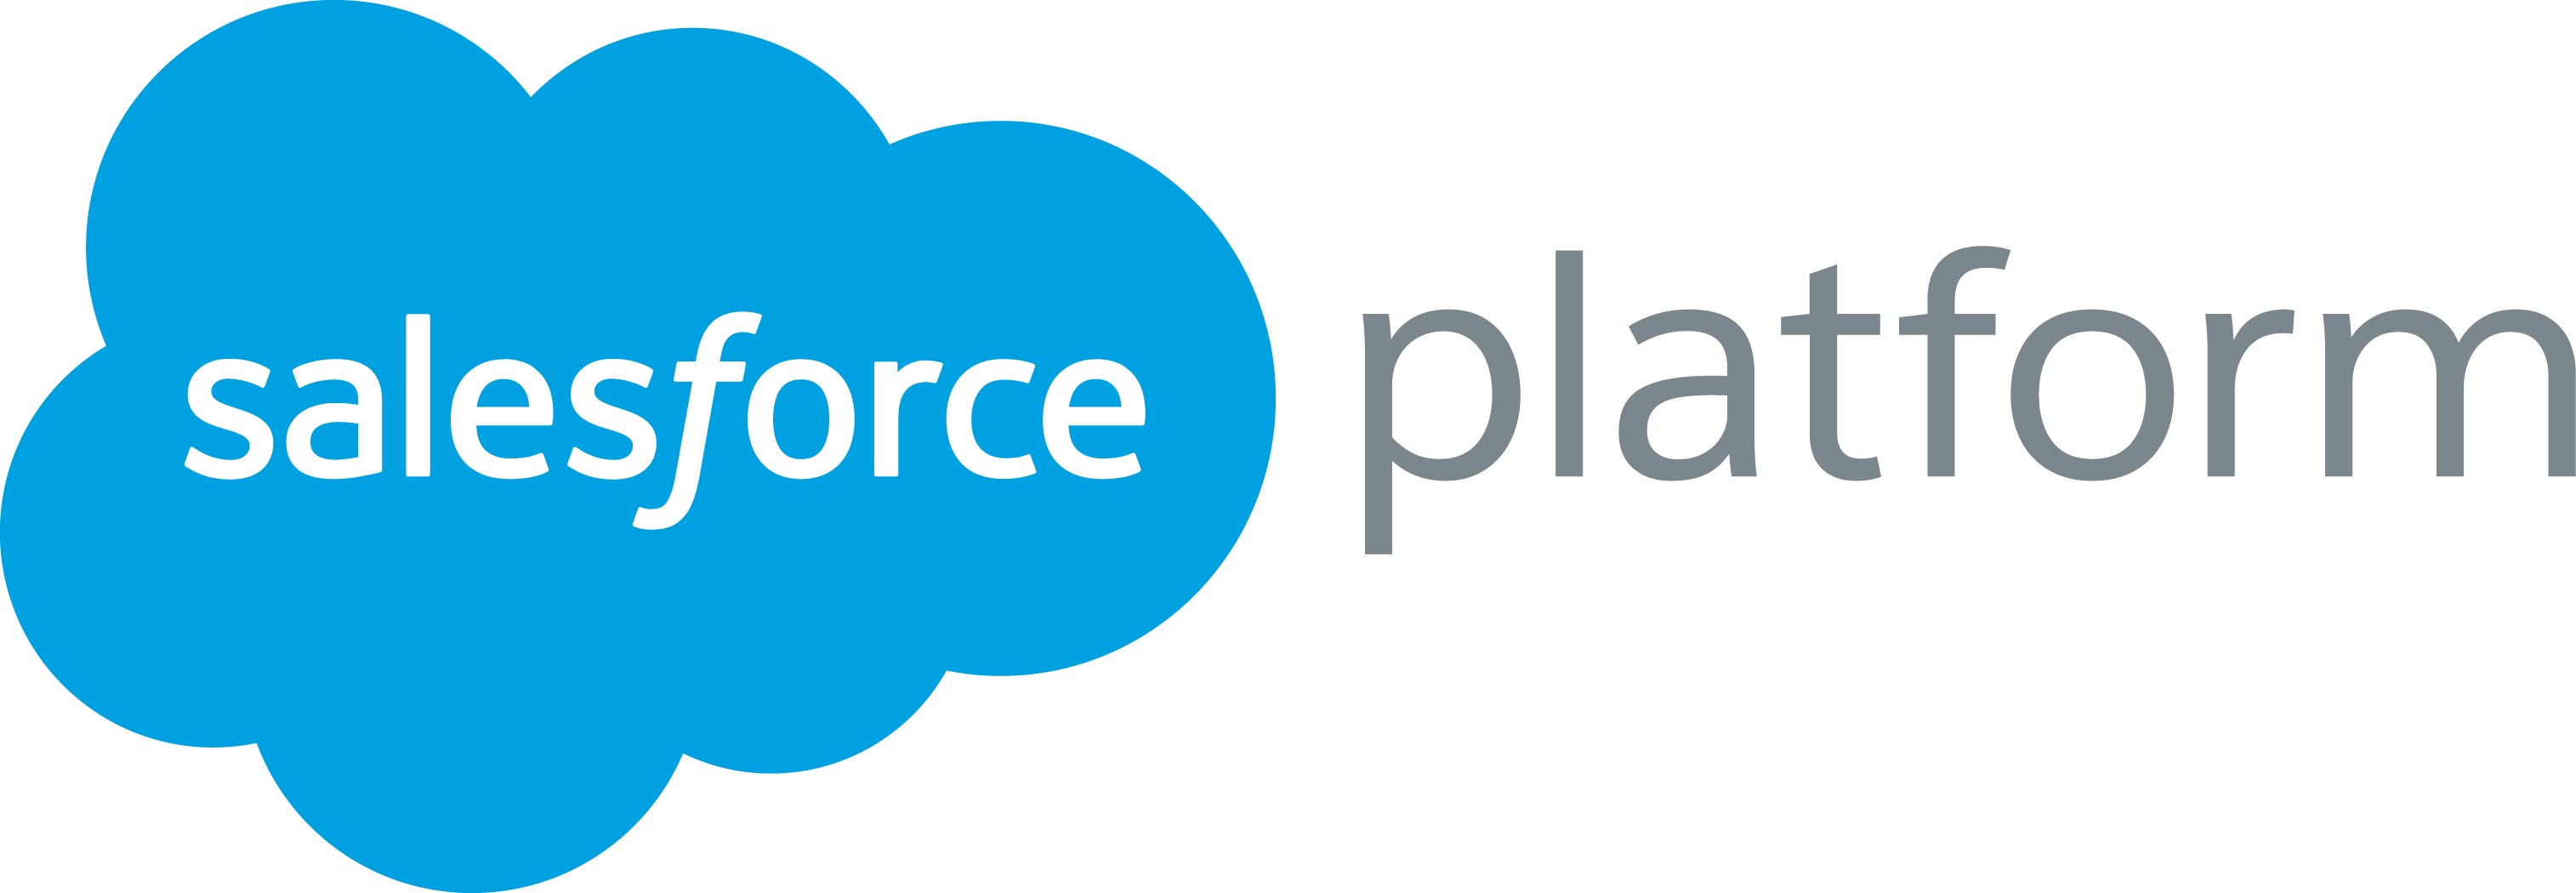 Salesforce Platform Logo - Salesforce App Cloud | The Leading Enterprise PaaS | Salesforce ...